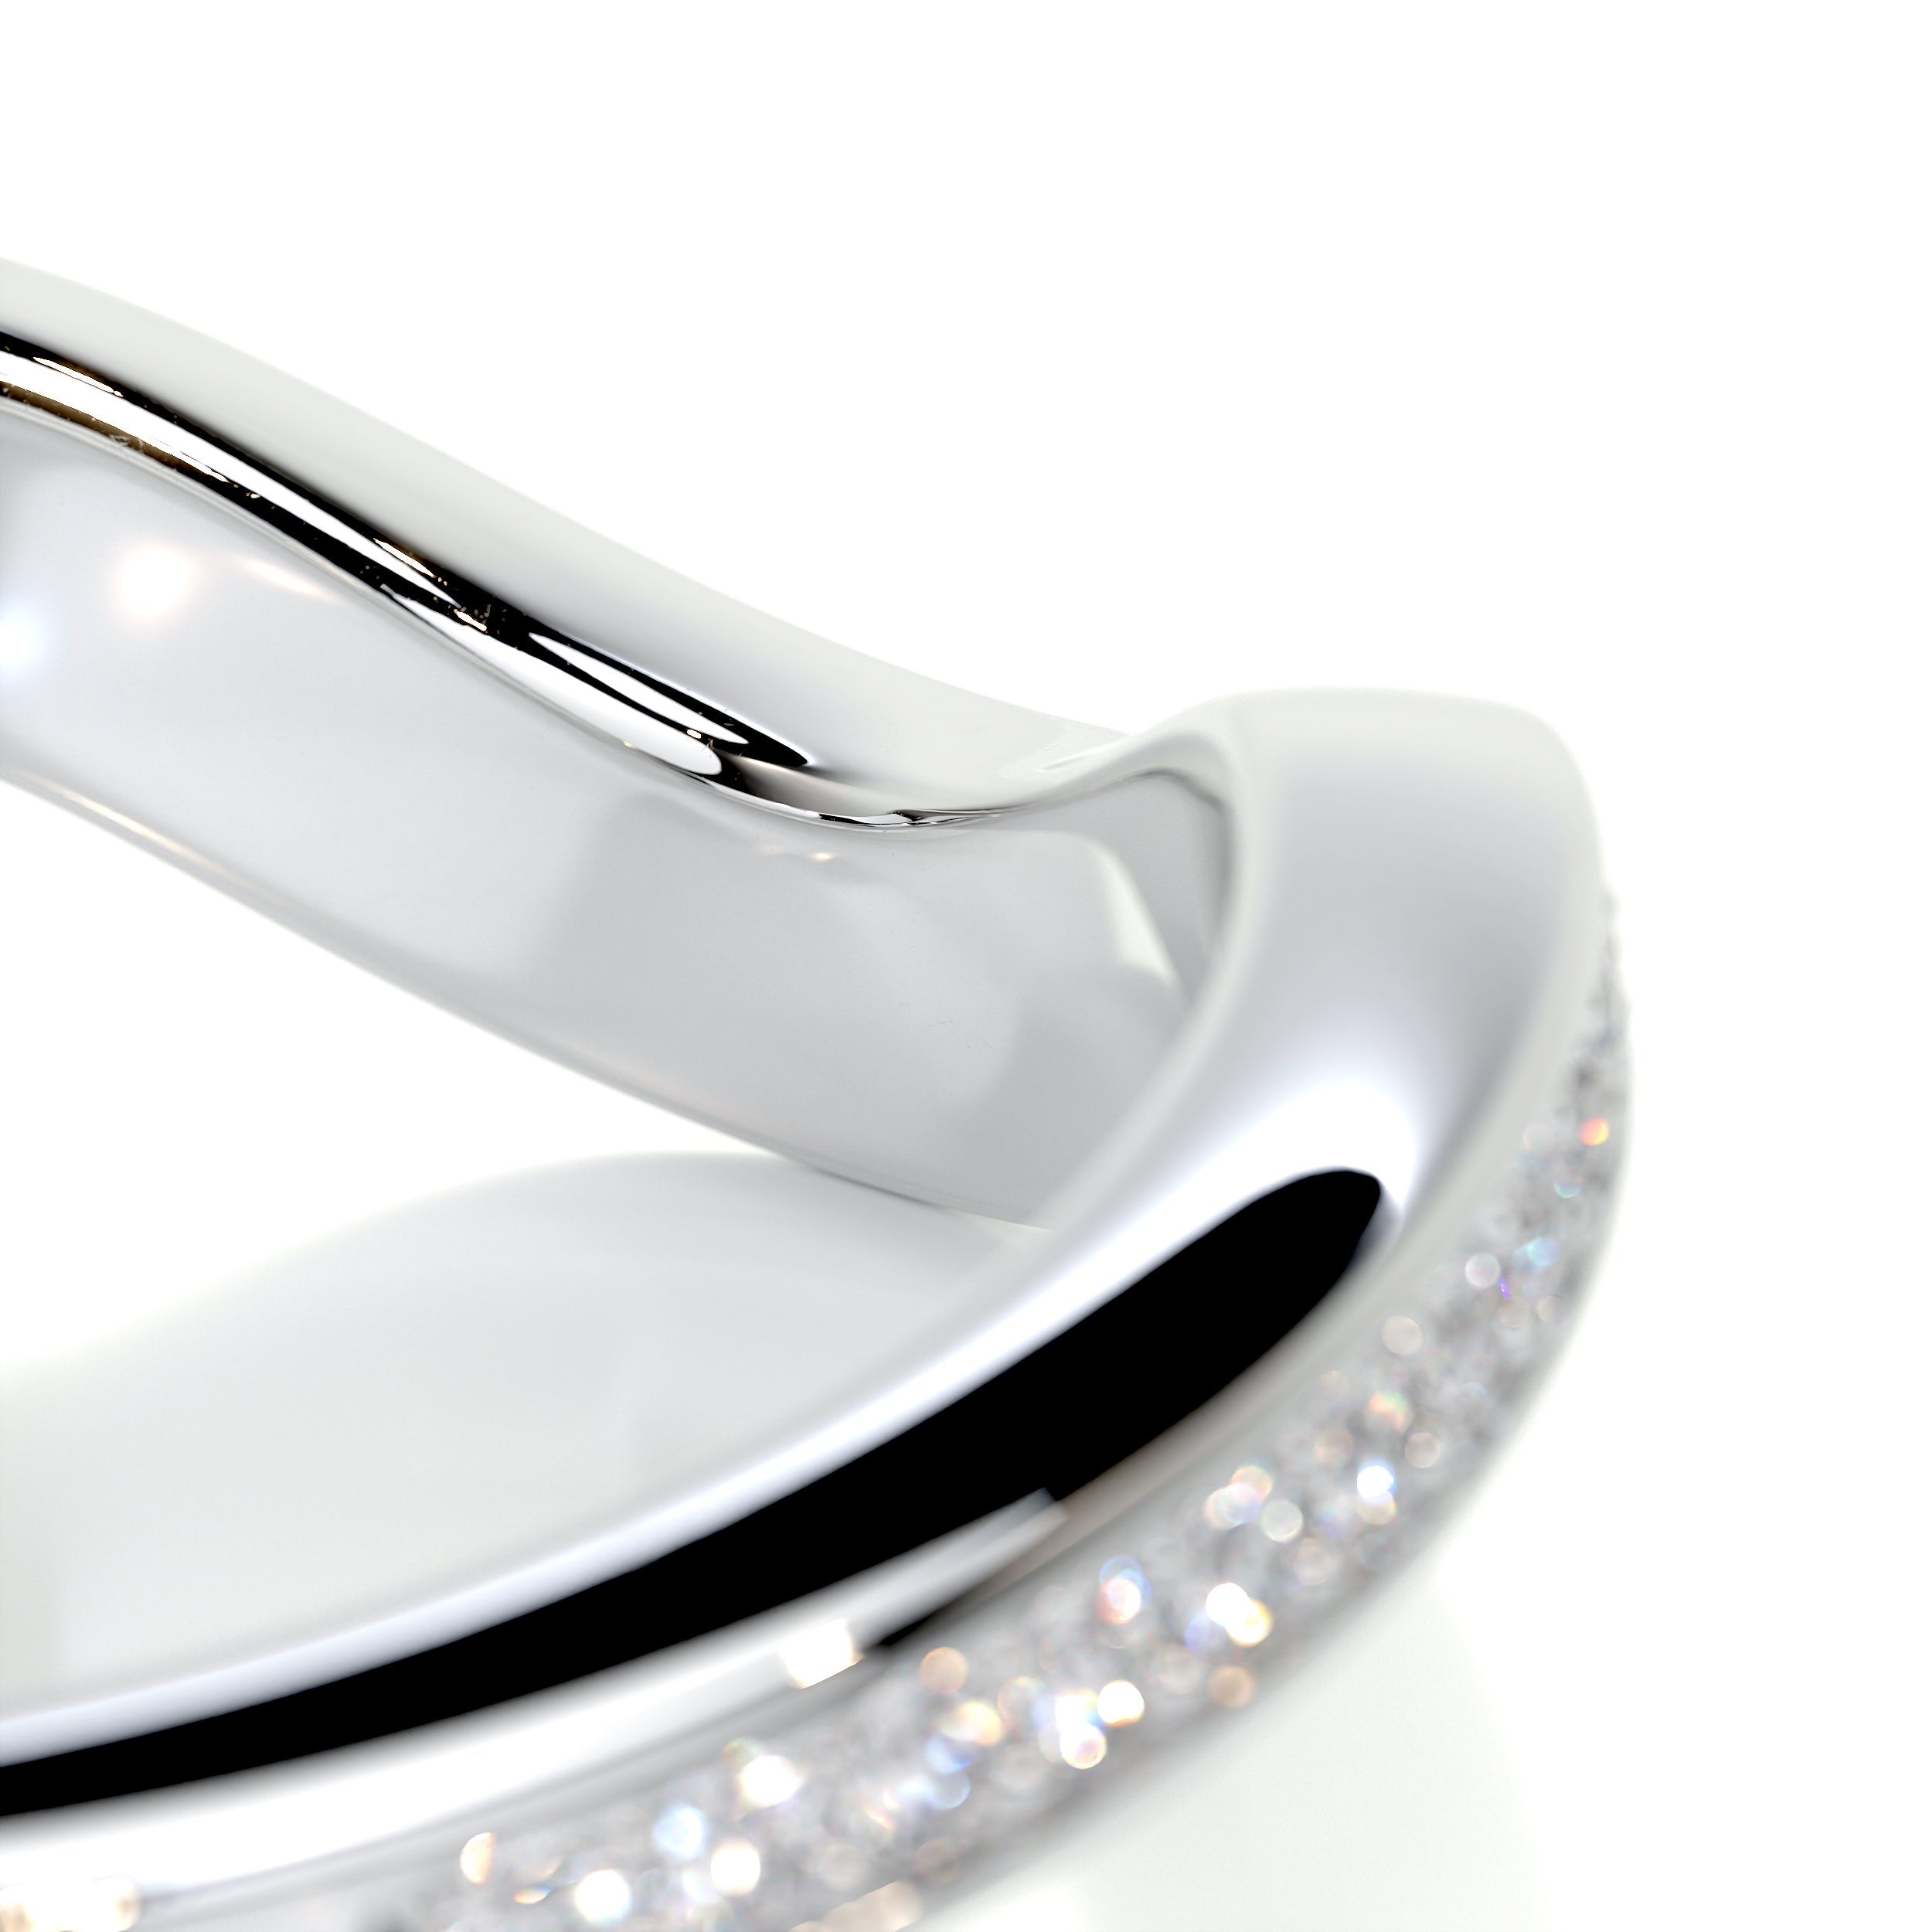 Lucy Diamond Wedding Ring   (0.30 Carat) -14K White Gold (RTS)